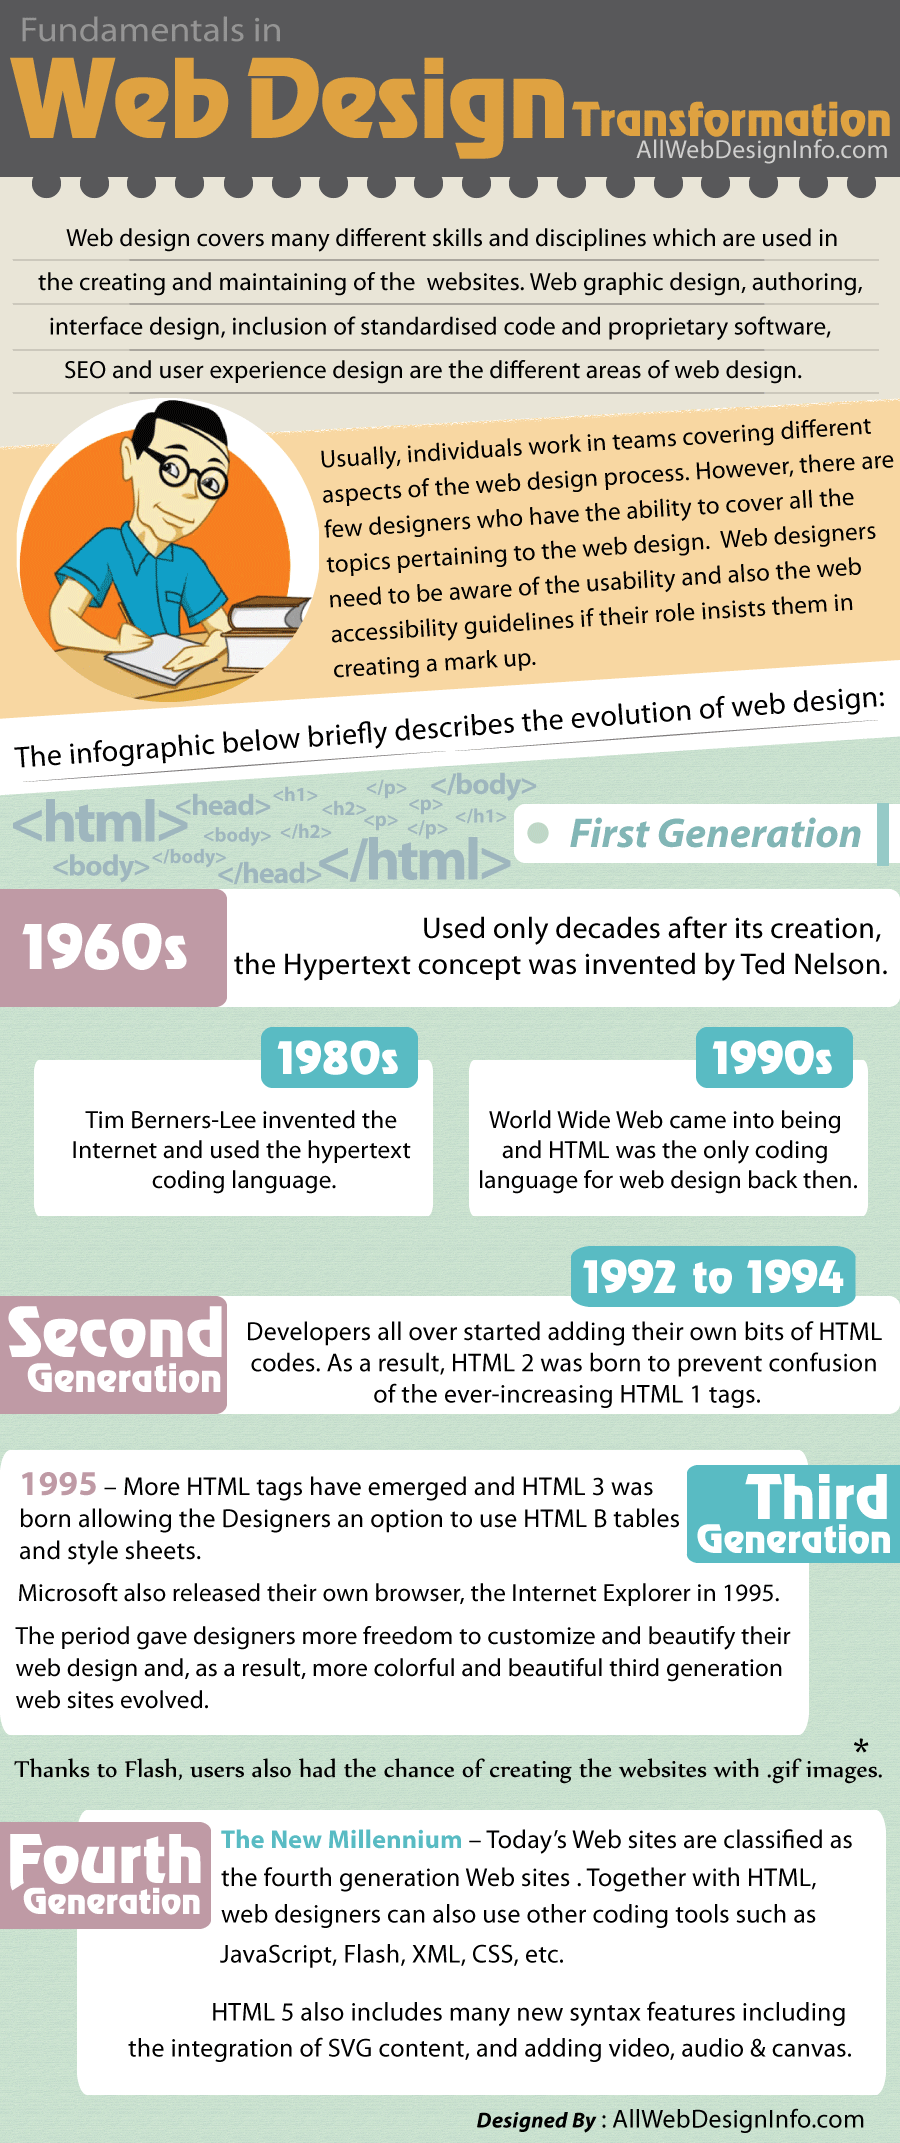 web-design-history-transformation-infographic